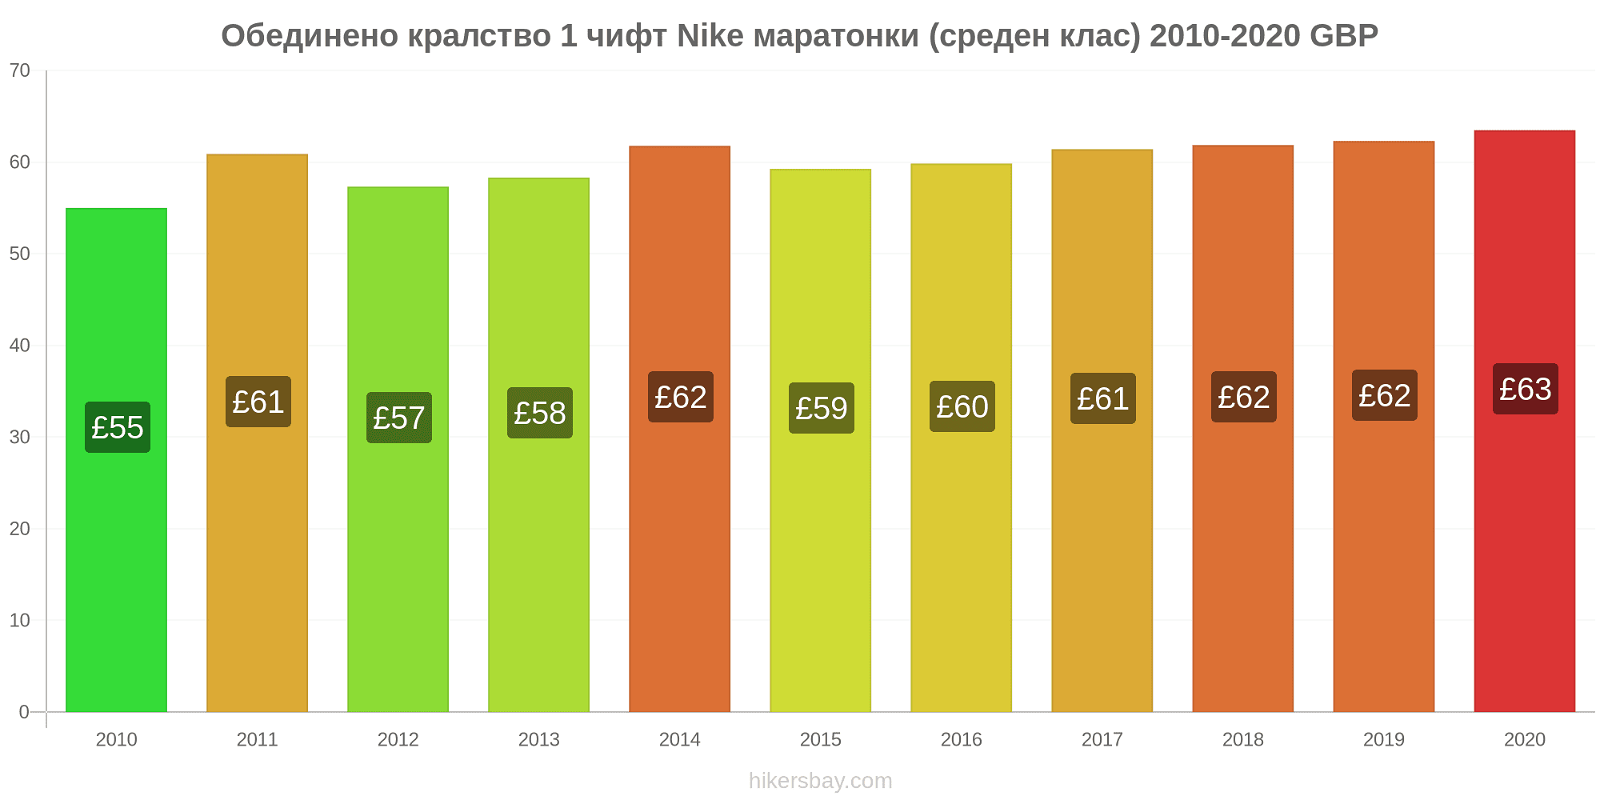 Обединено кралство ценови промени 1 чифт Nike маратонки (среден клас) hikersbay.com